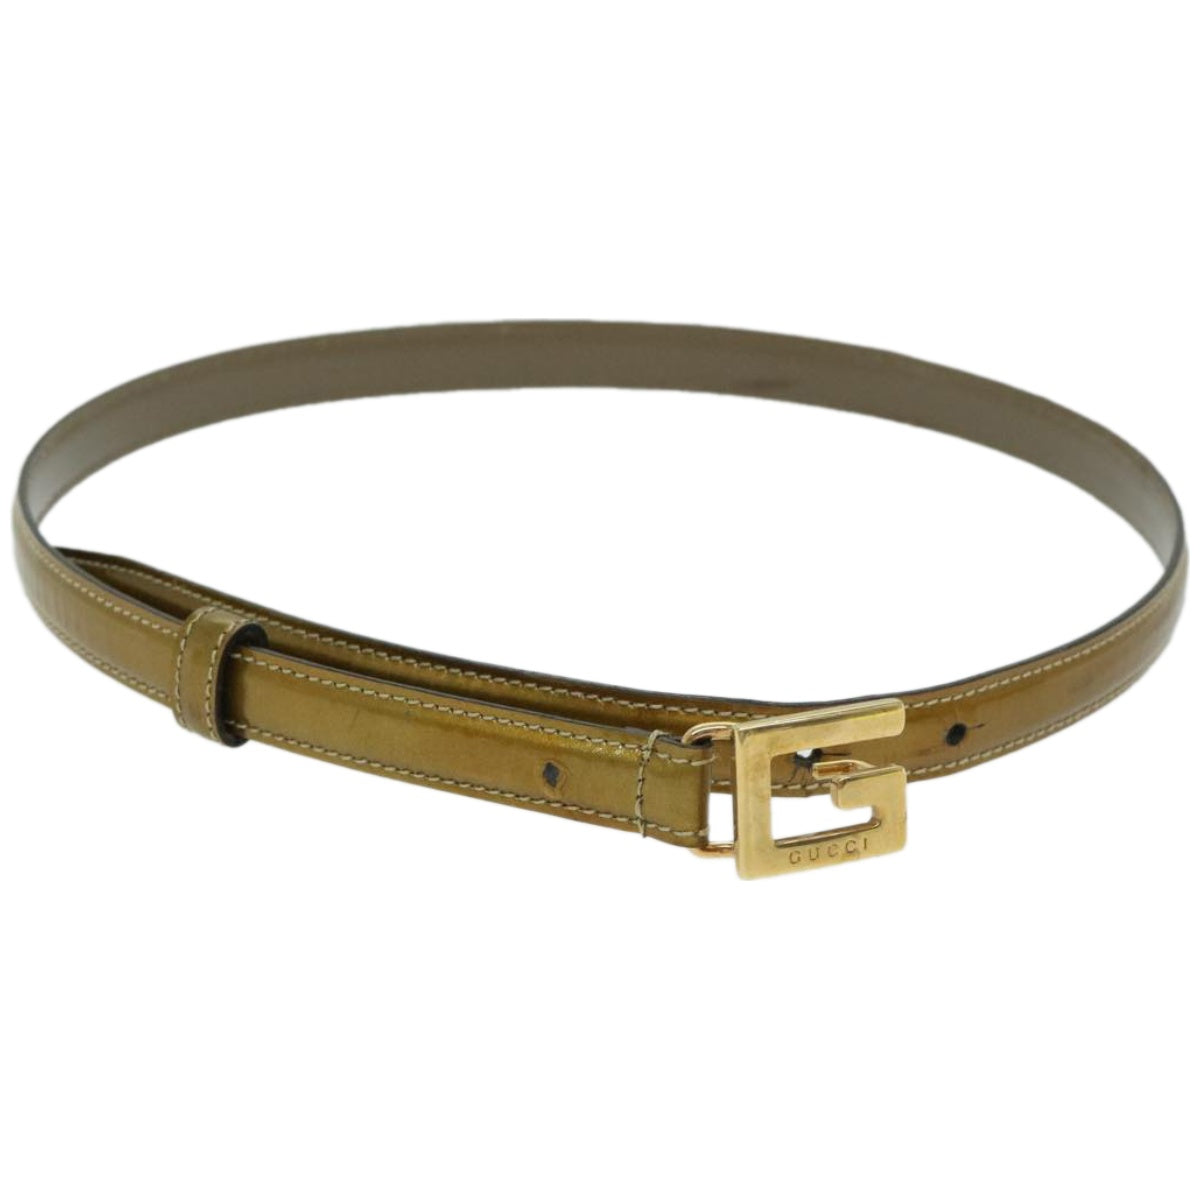 GUCCI Belt Leather 30.3"" Gold Tone 65 26 037 1046 0969 Auth ti1574 - 0